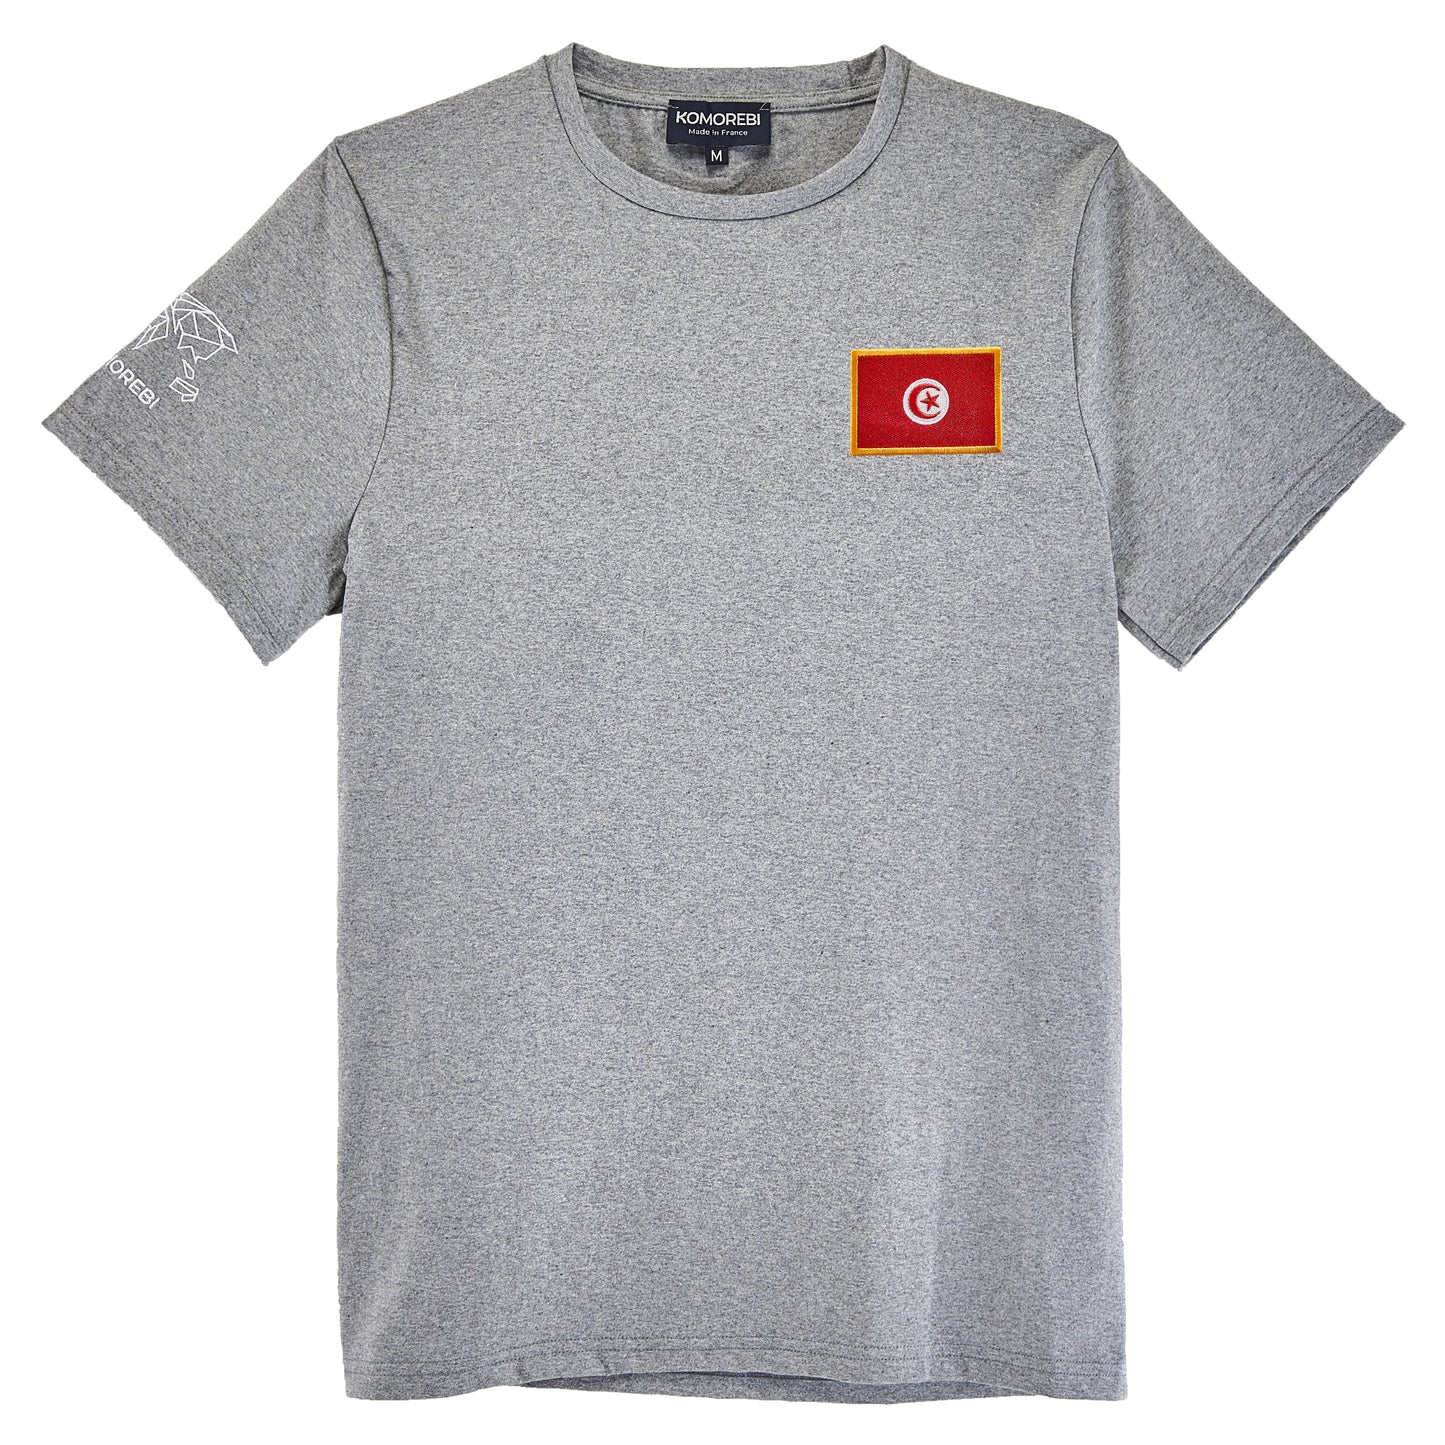 Tunisia - flag t-shirt